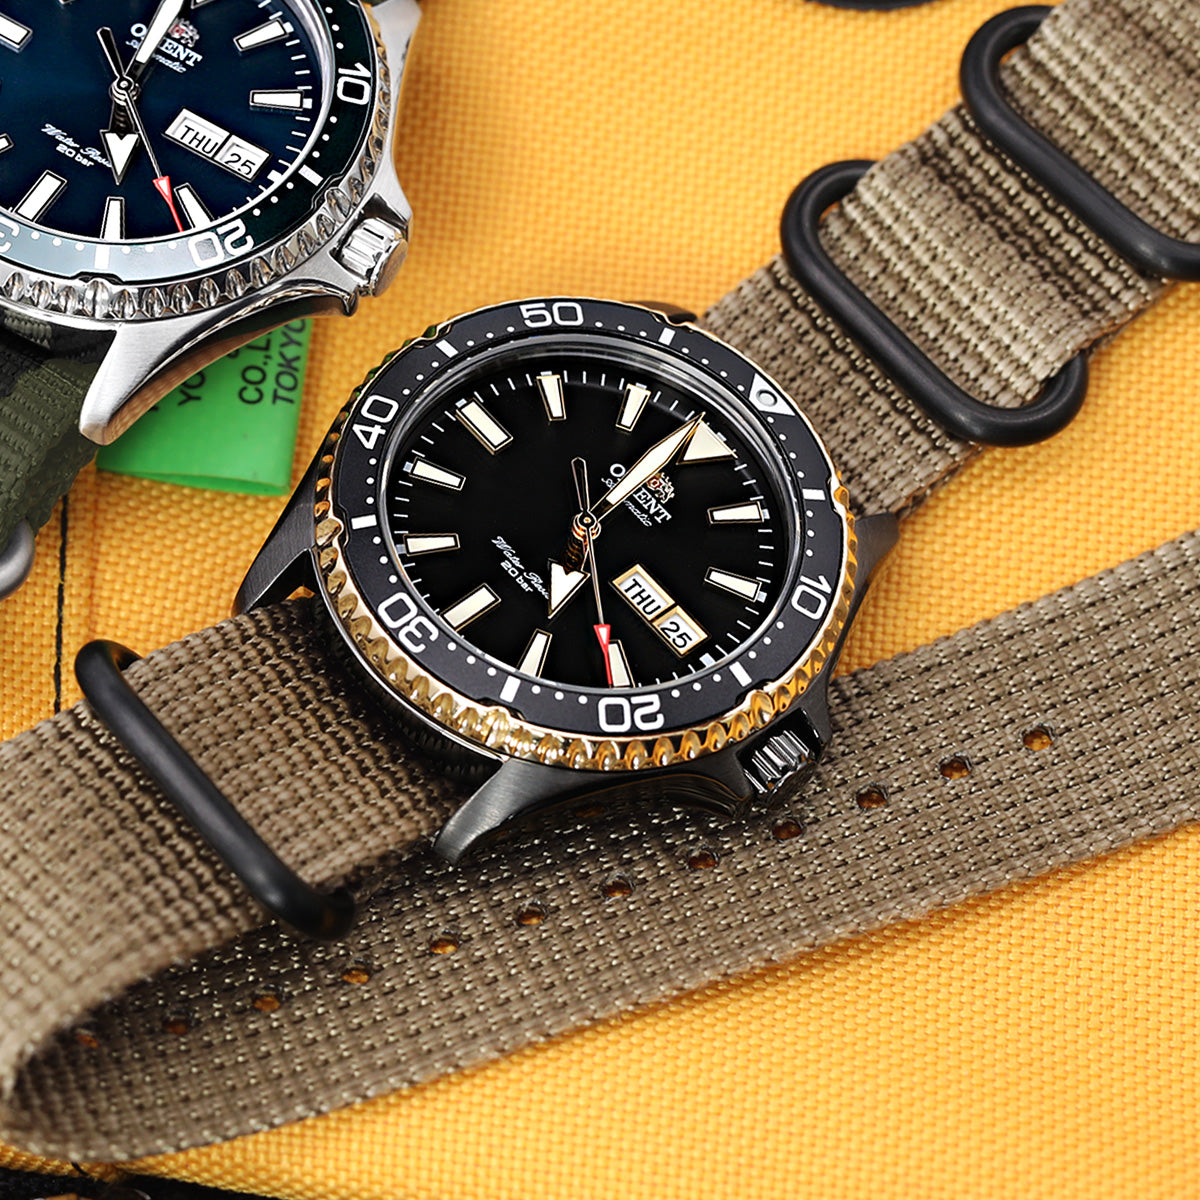 20mm, 22mm or 24mm MiLTAT 3 Rings Zulu military watch strap 3D woven nylon armband - Khaki, PVD Black Hardware